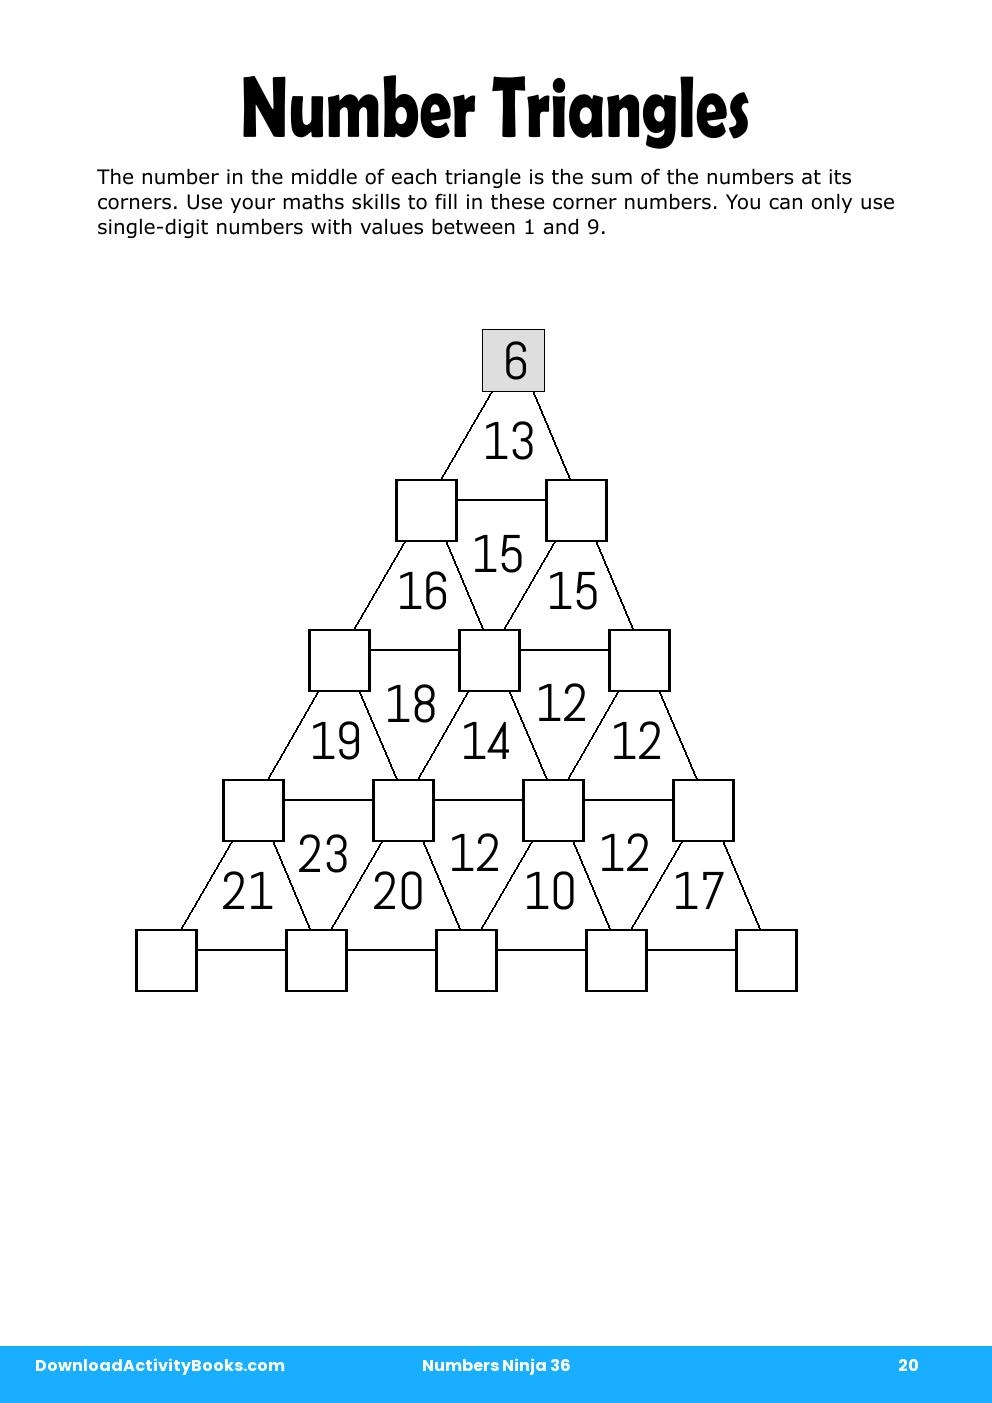 Number Triangles in Numbers Ninja 36